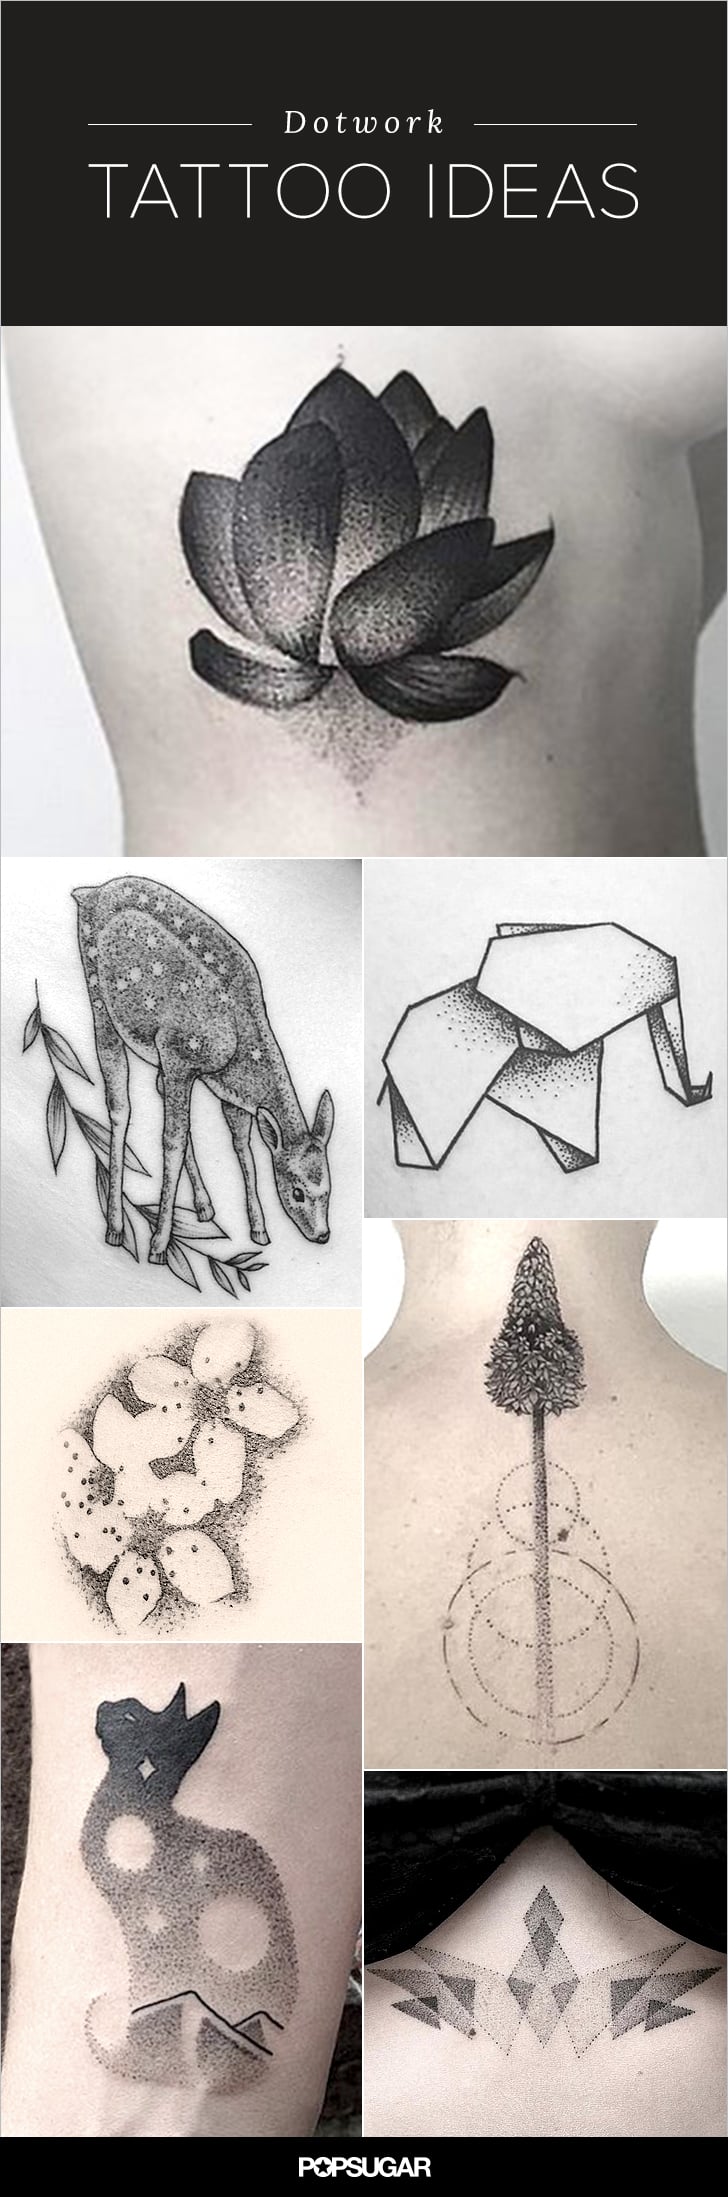 lotustattoo – Portfolio of A Montreal Tattoo Artist